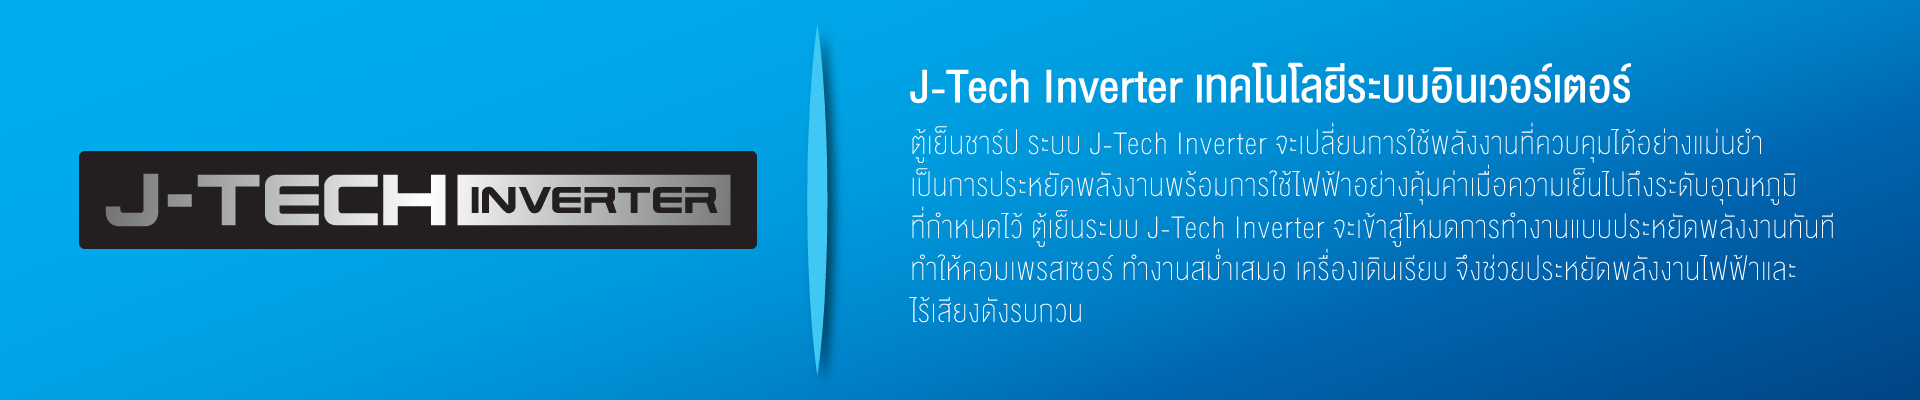 REF---website-spec-patern---1920x400-J-Tech-Inverter